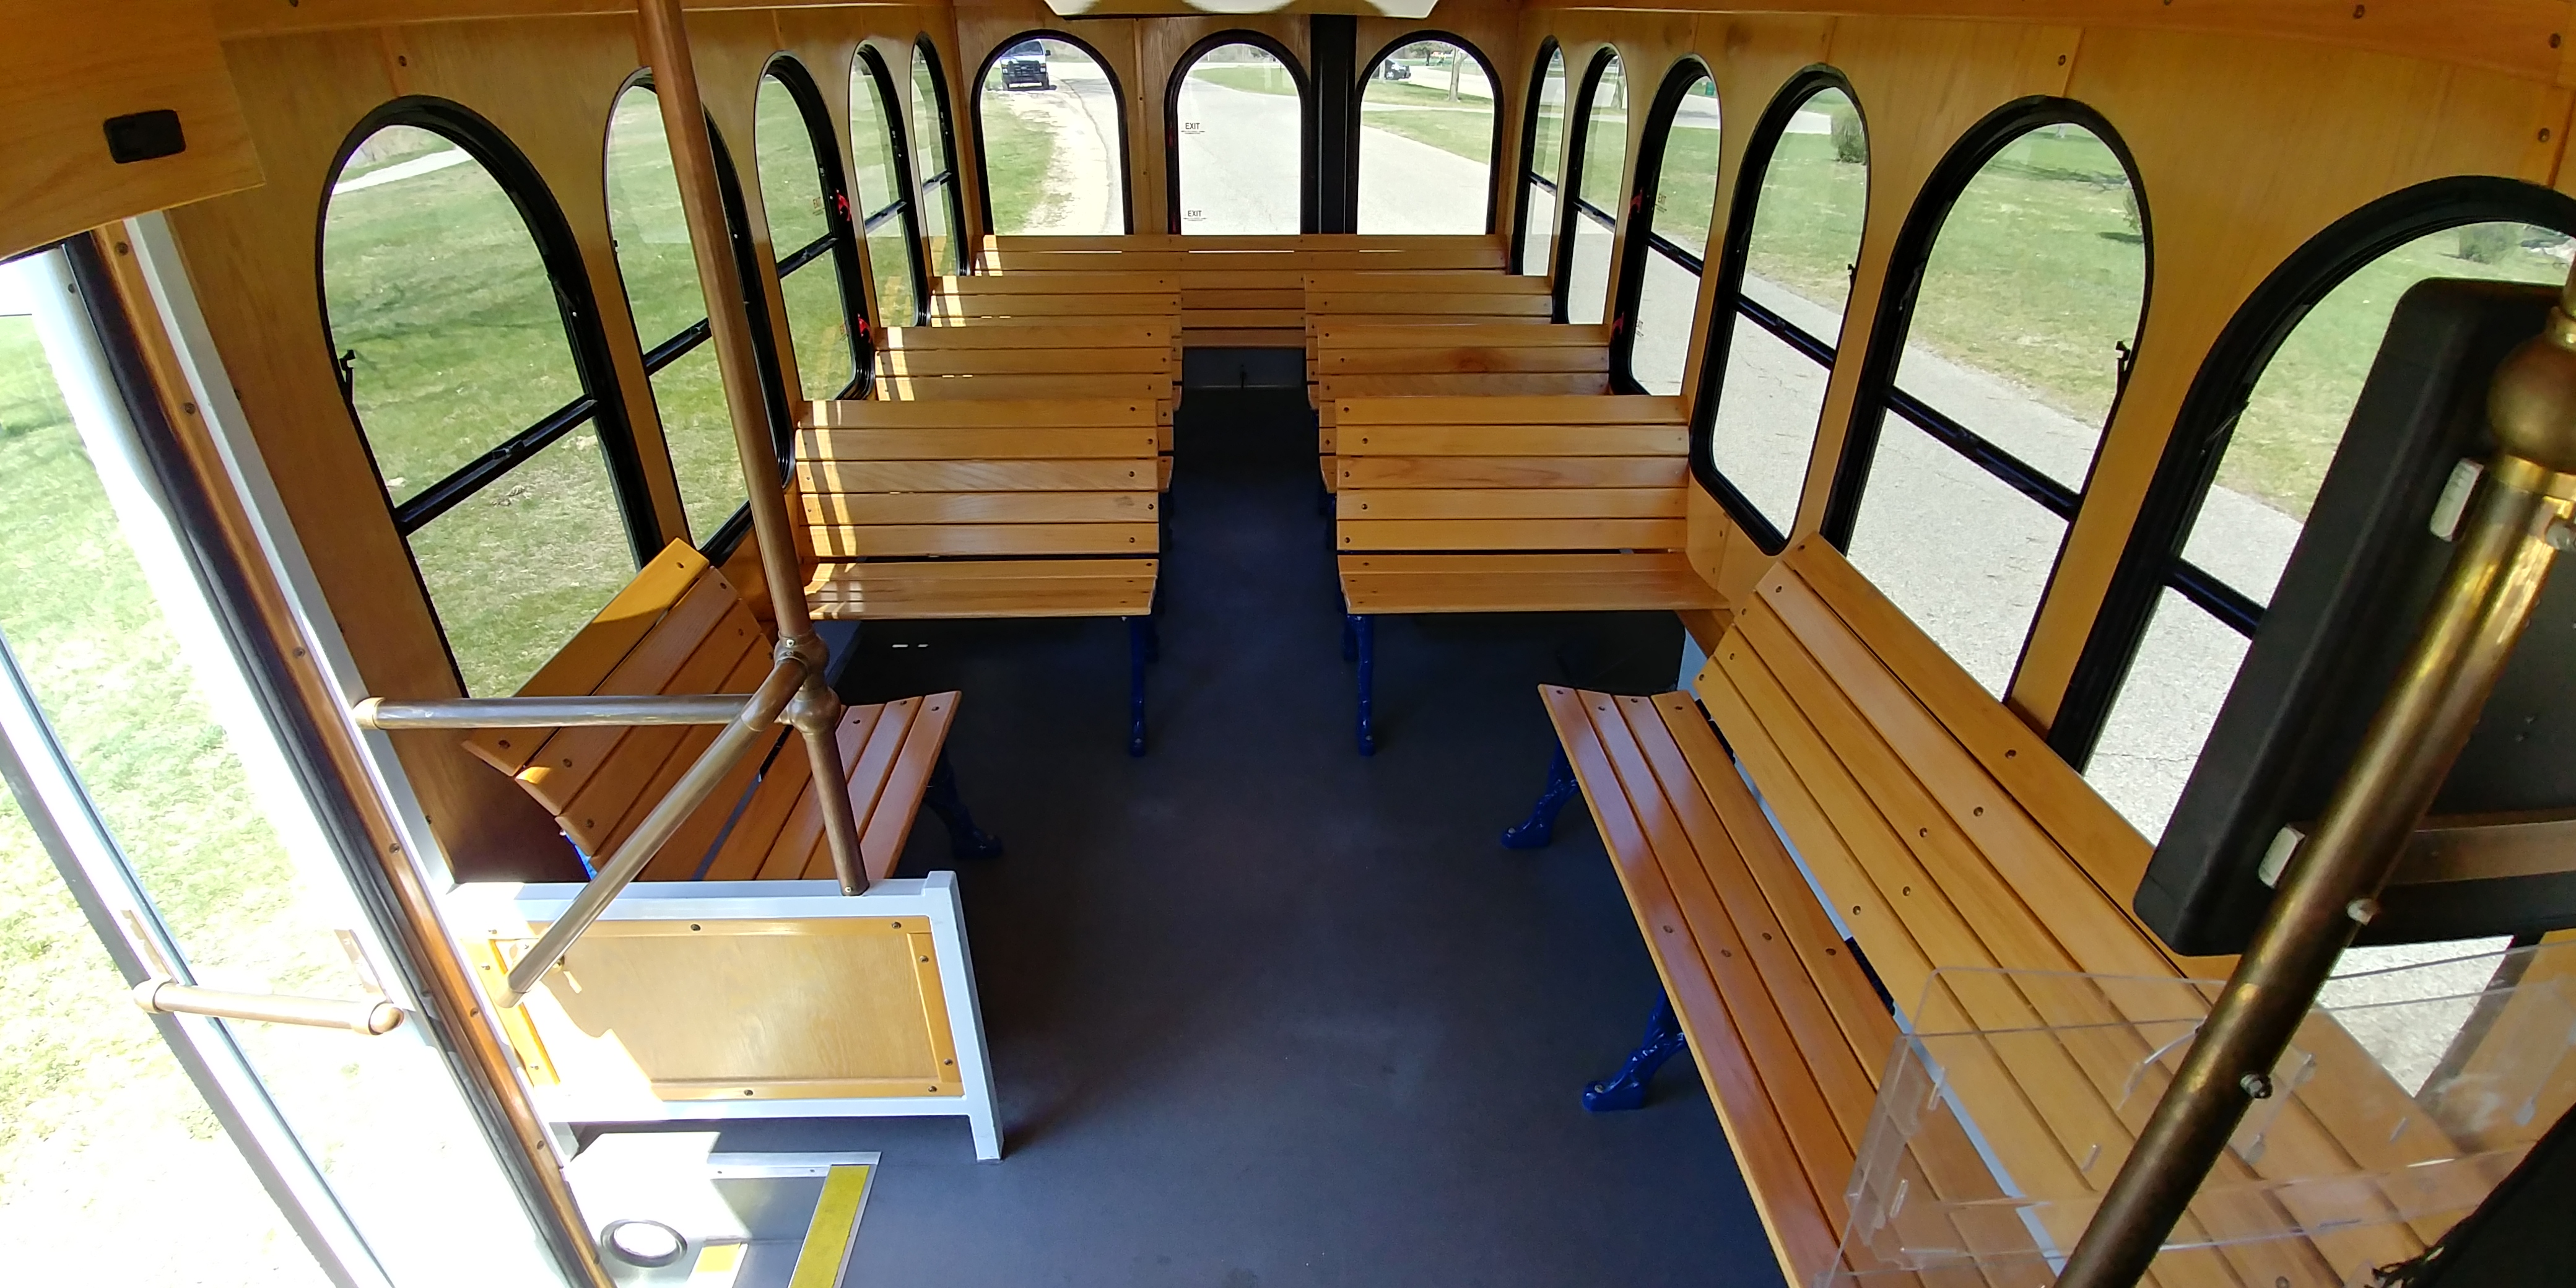 24 Passenger Trolley Interior 2